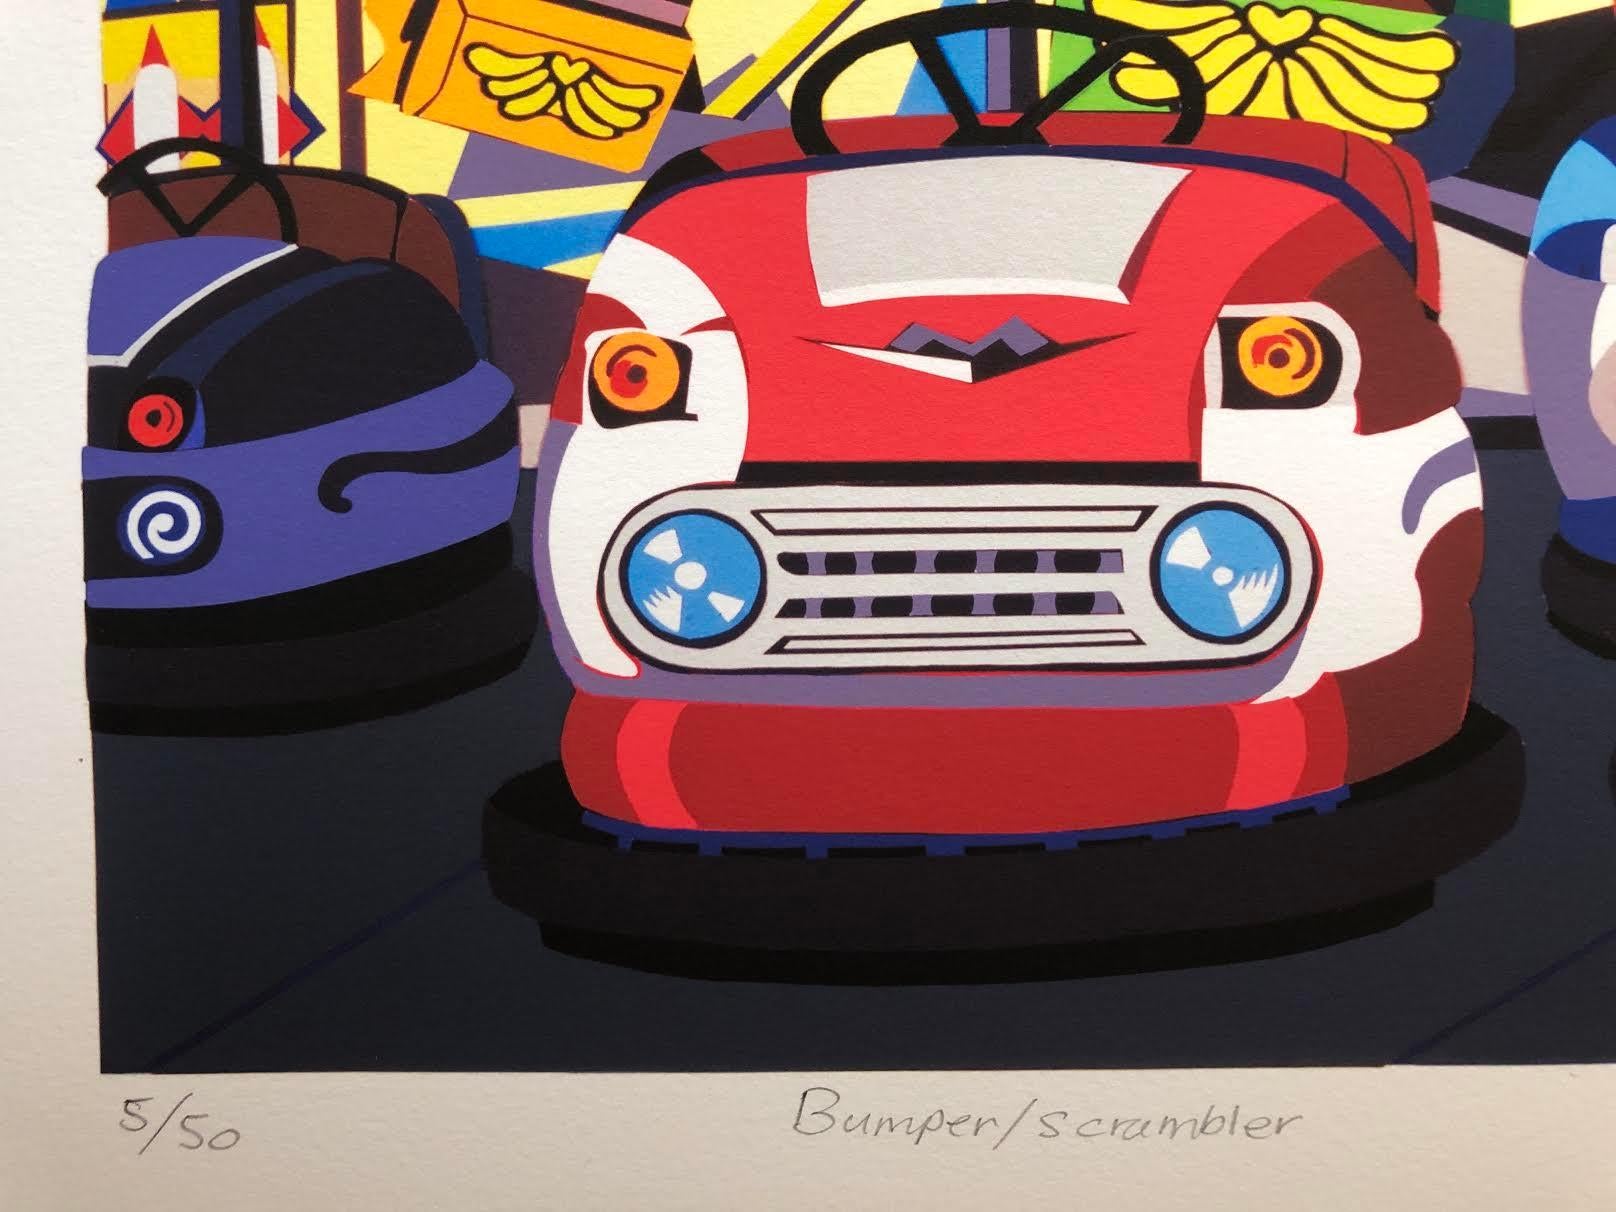 Bumper/Scrambler, bold, colorful bumper car print, amusement park, Coney Island,  - Pop Art Print by Philomena Marano